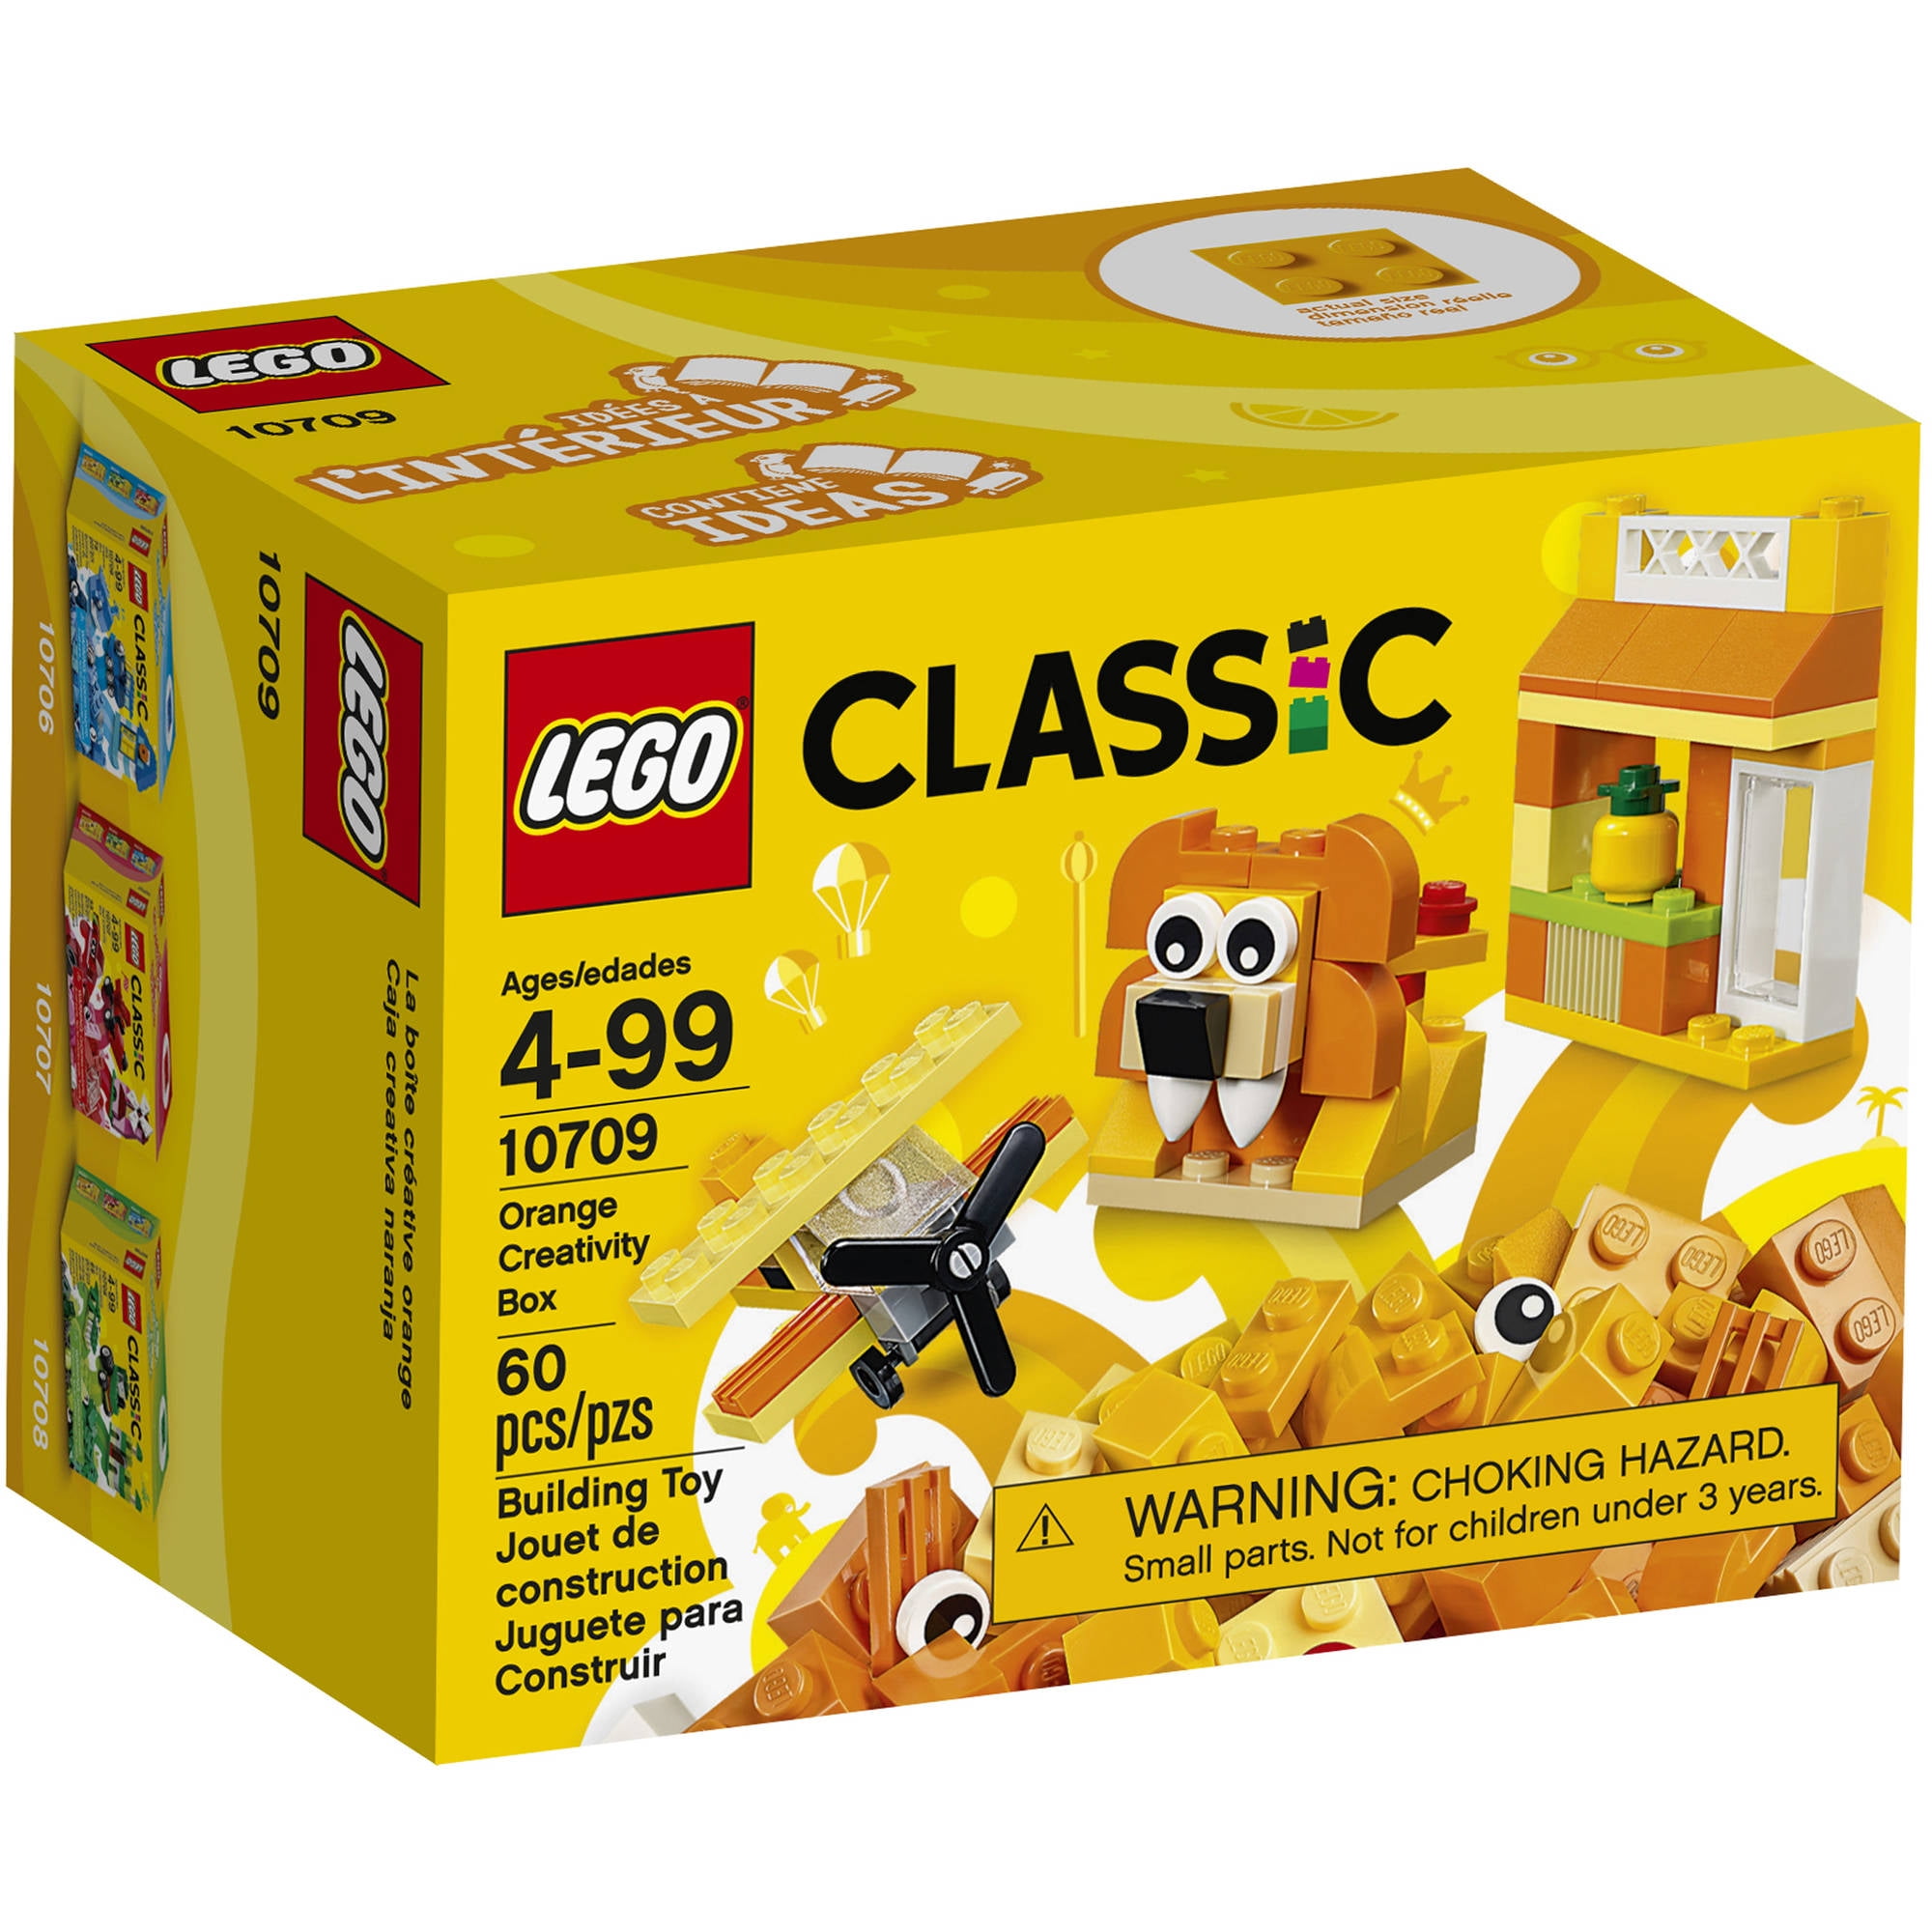 Wonderbaarlijk Kwelling Spektakel LEGO Classic Creativity Box, Orange 10709 (60 Pieces) - Walmart.com